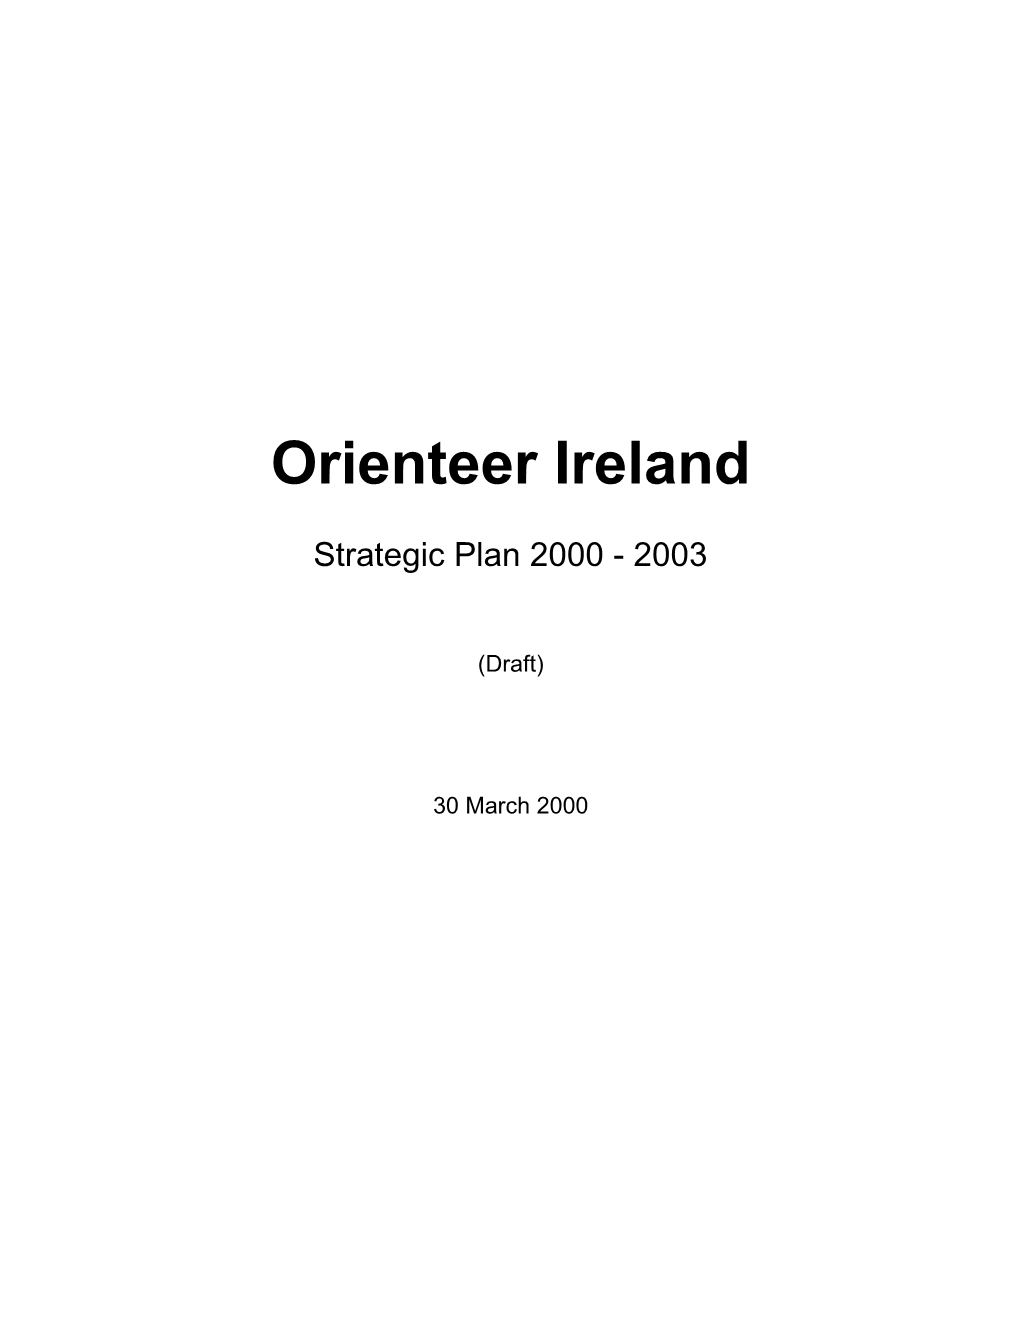 Strategic Plan - Orienteering Ireland